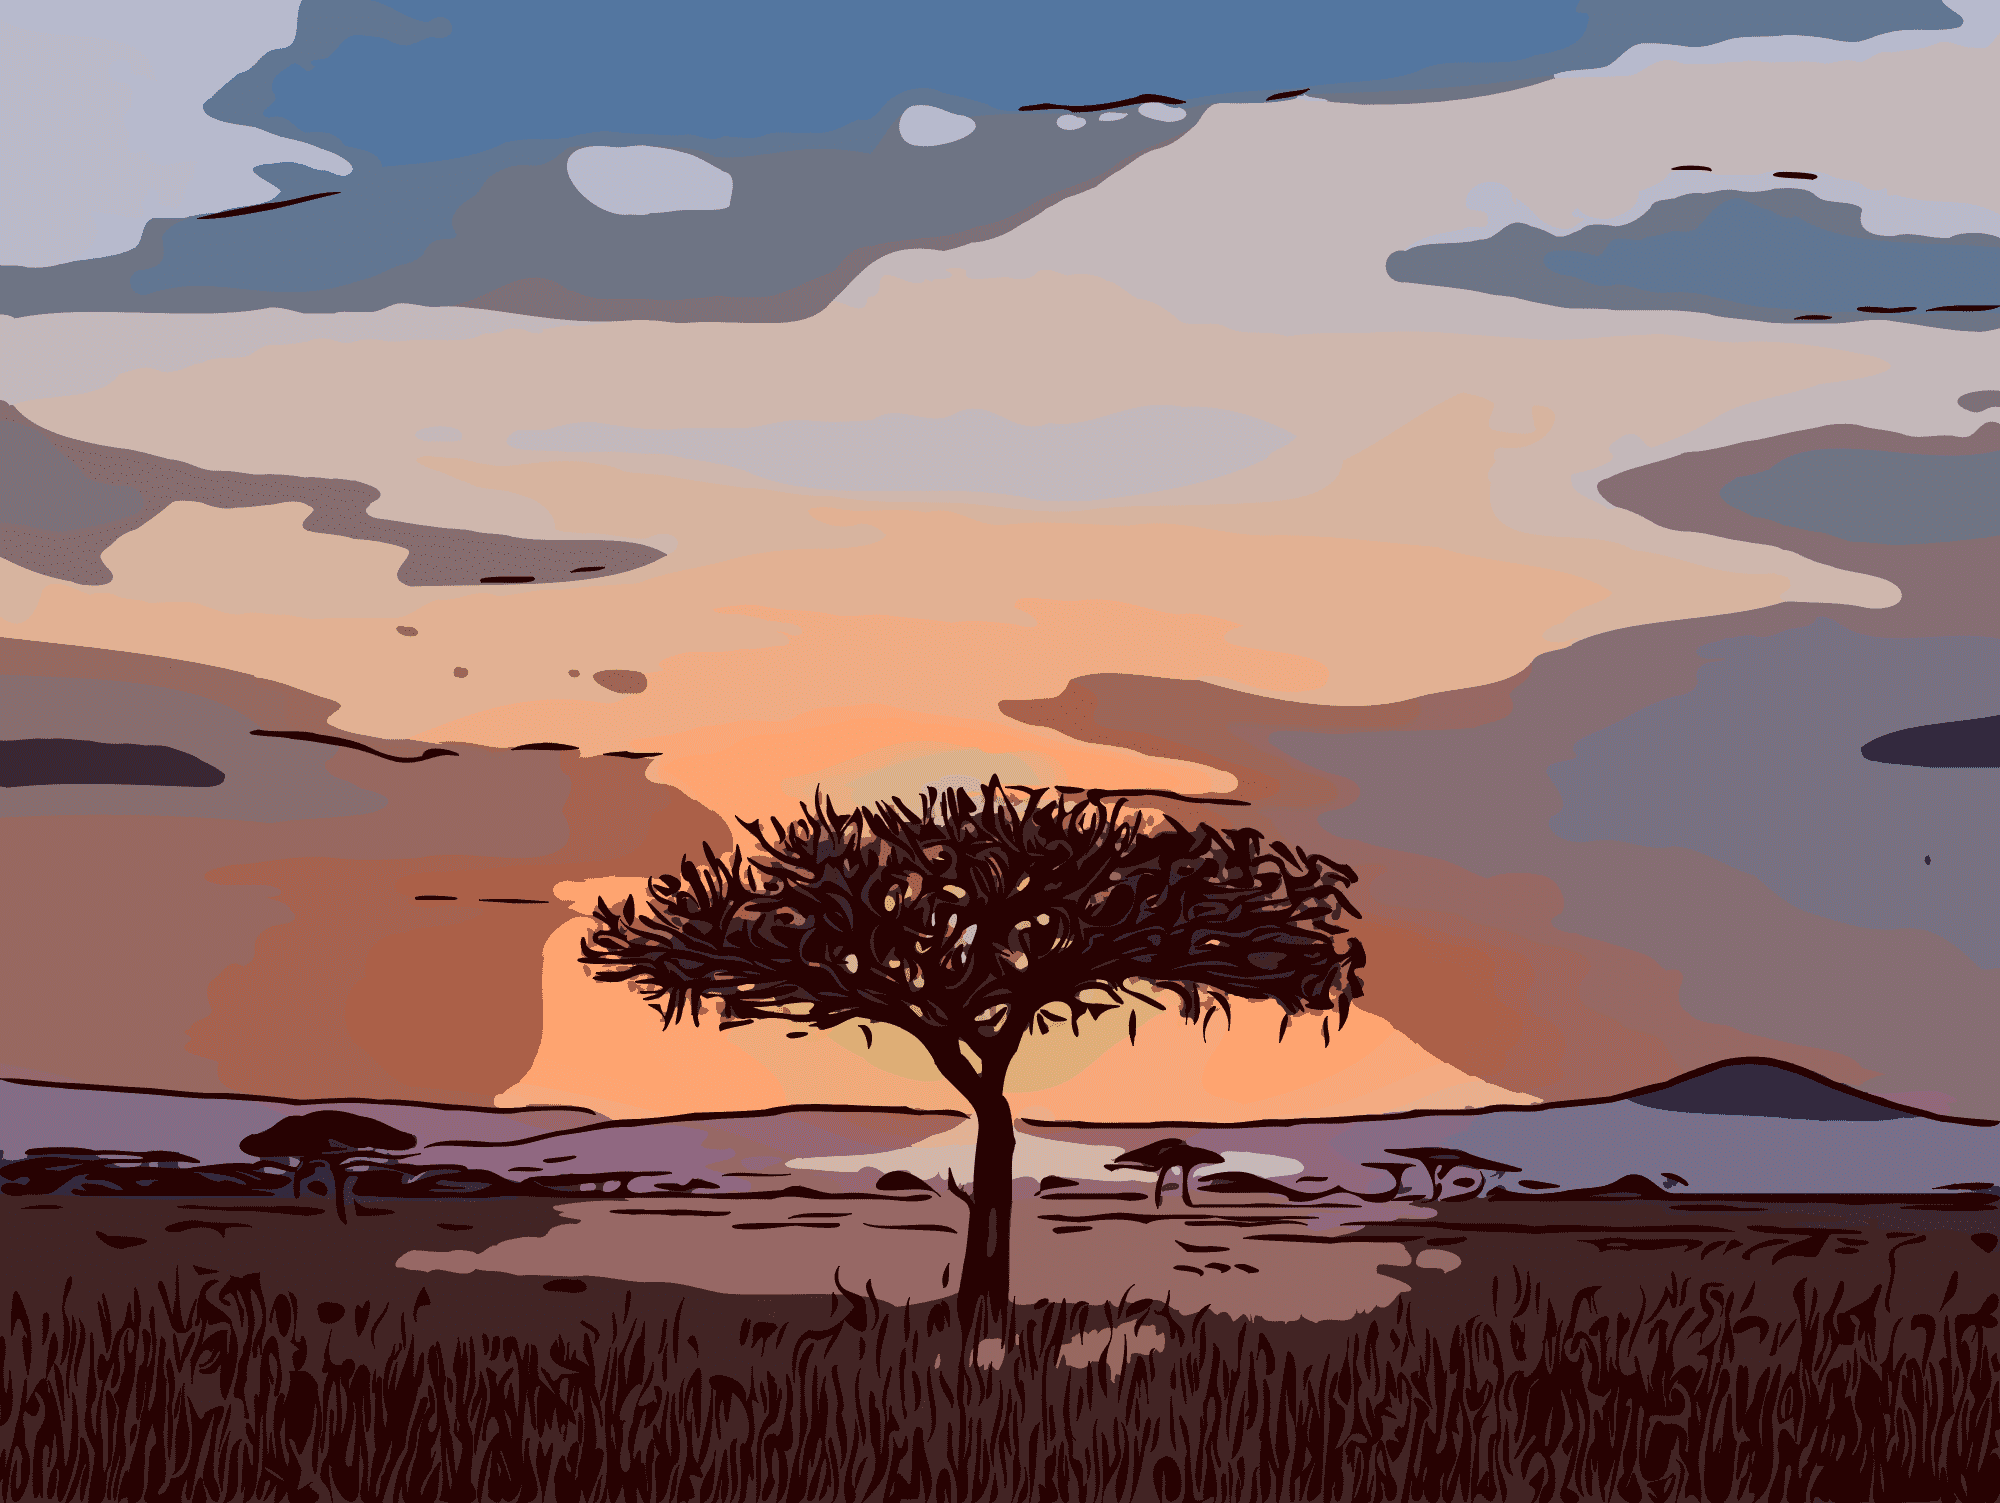 A single tree at sunset